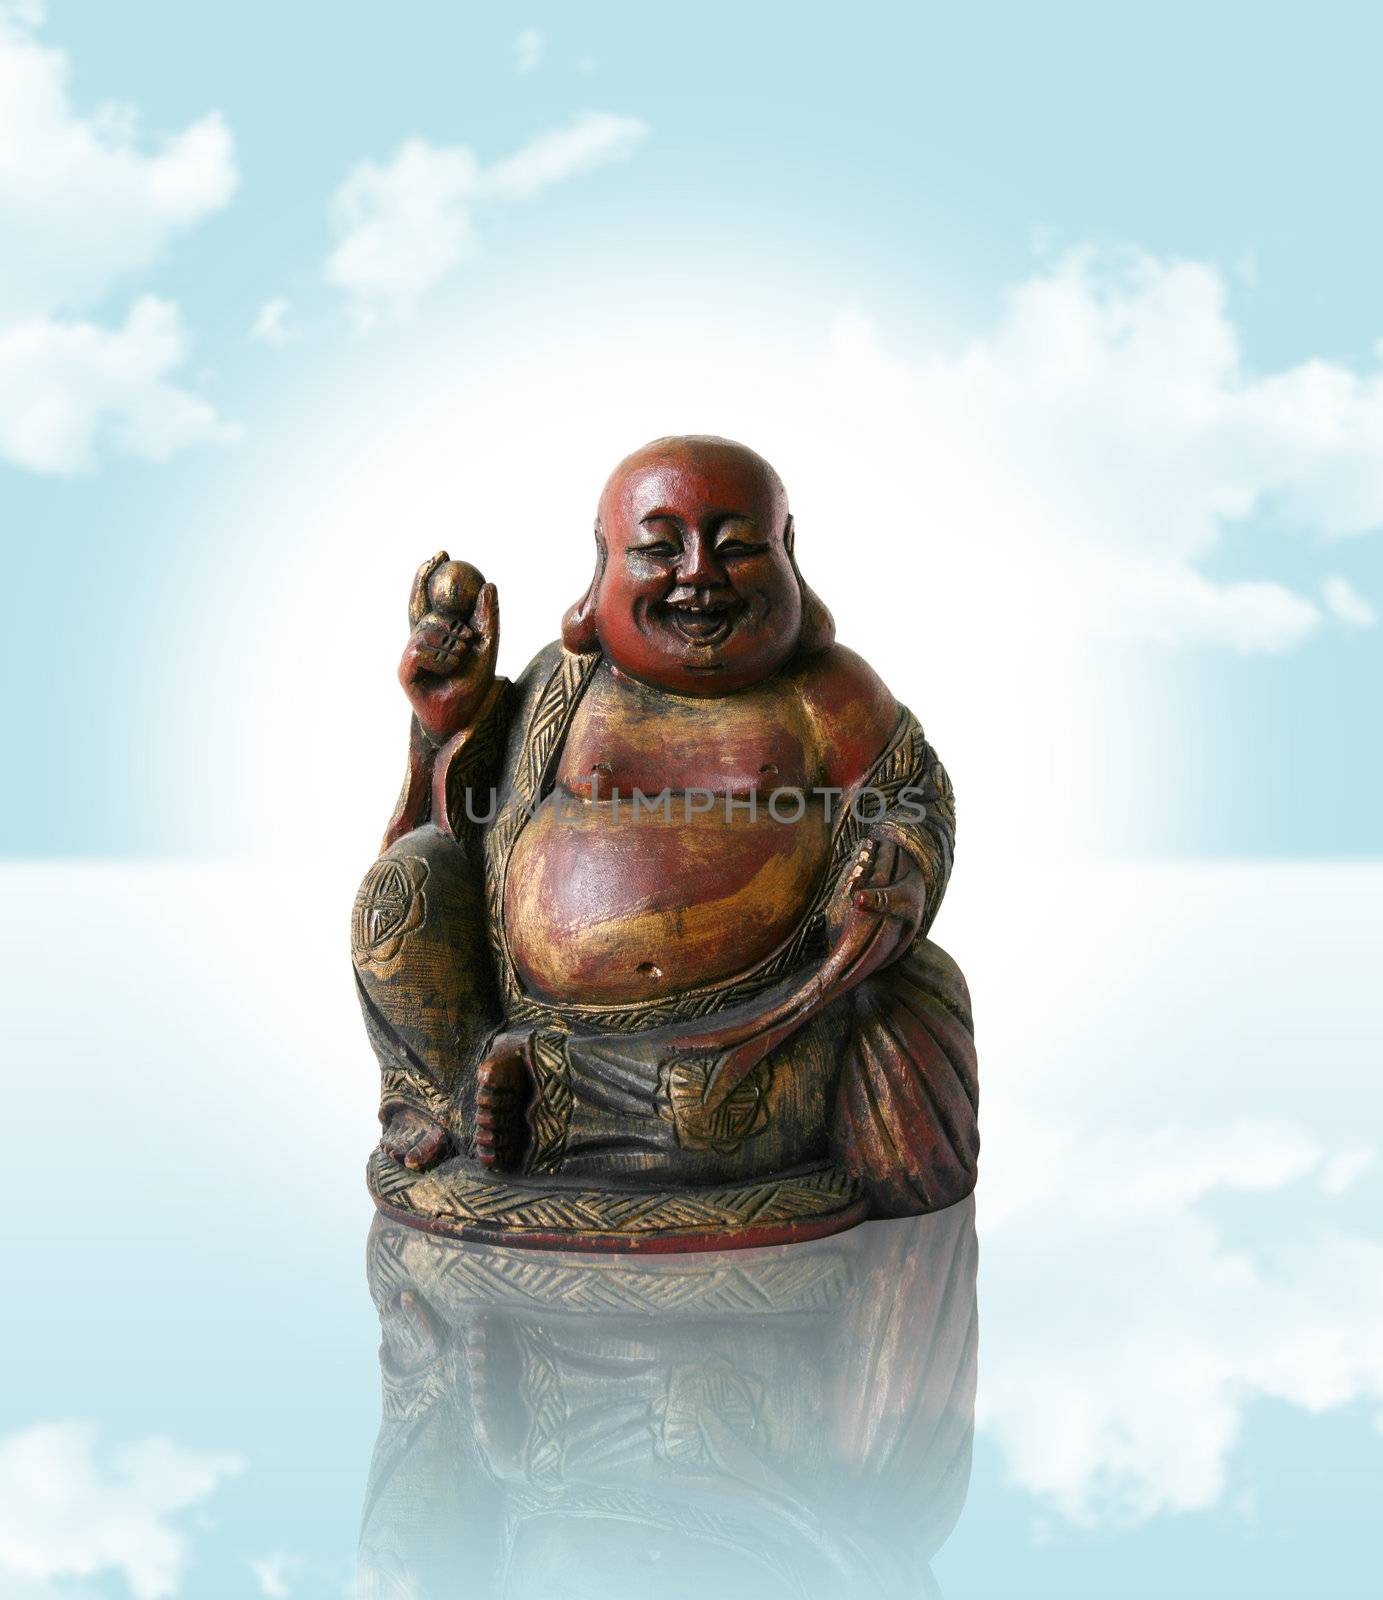 Chinese Buddha on a blue dream background
